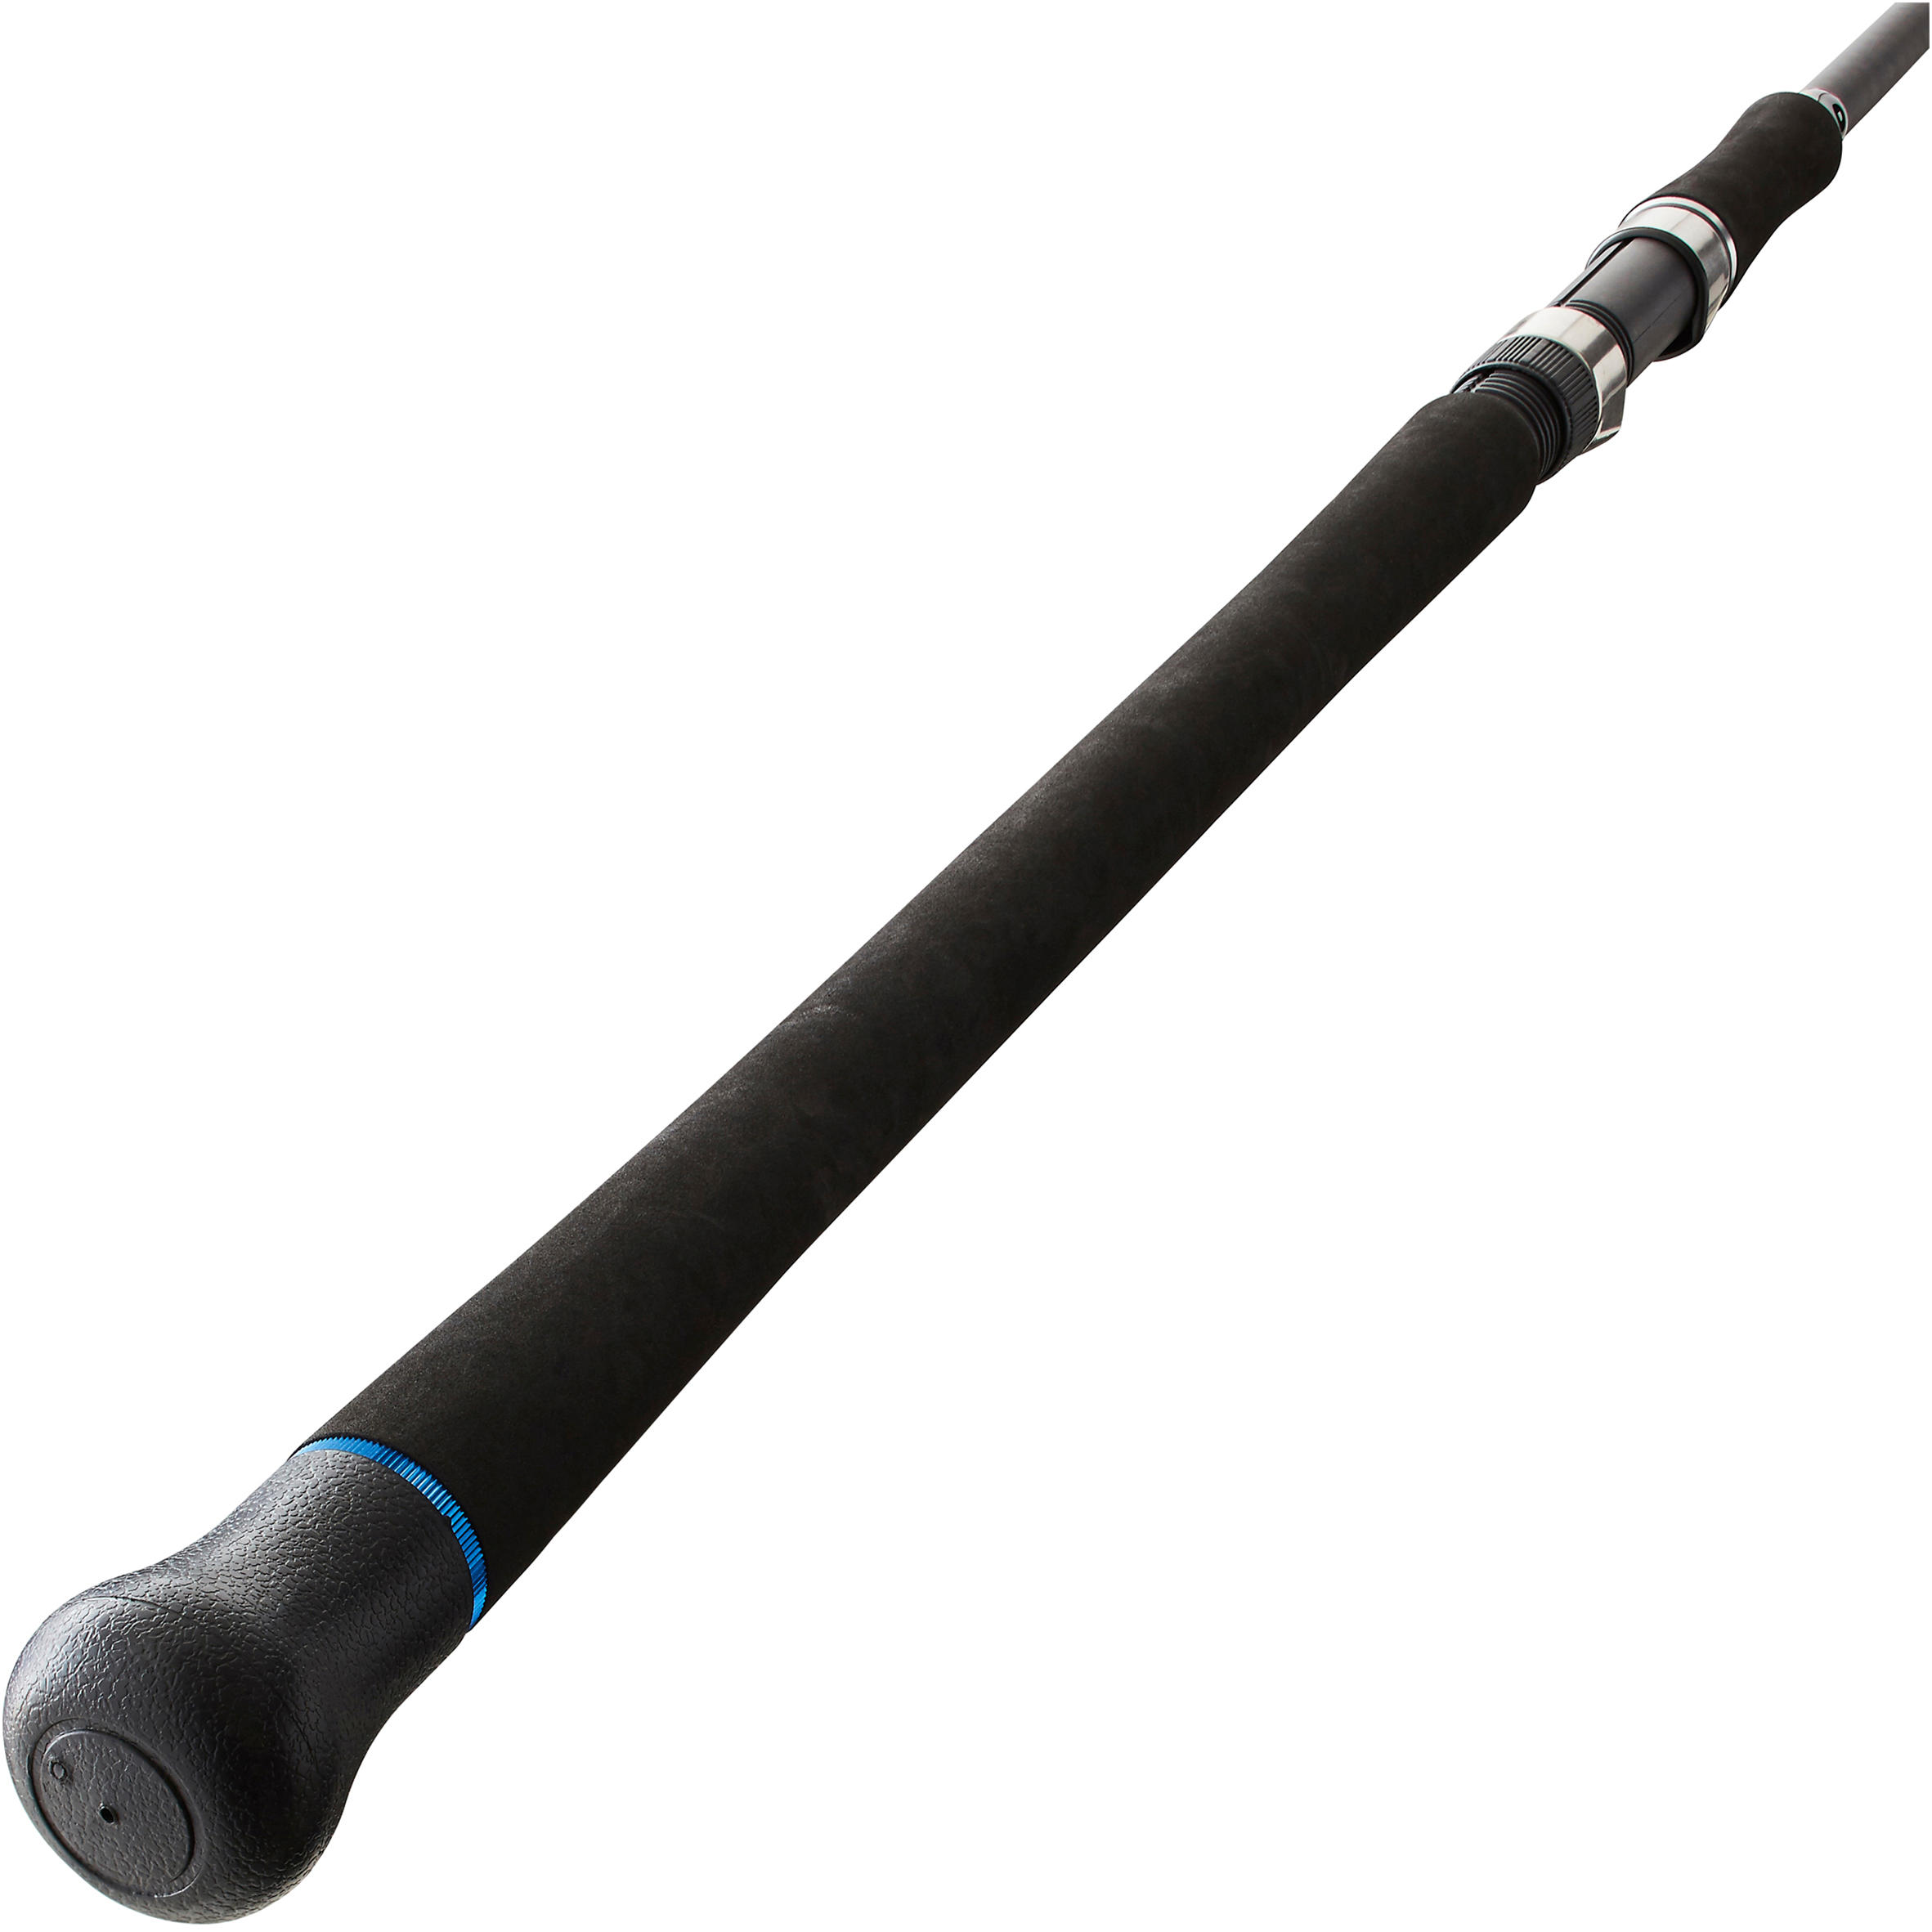 Caperlan Seacoast-5 290/2 Sea Fishing Rod - One Size